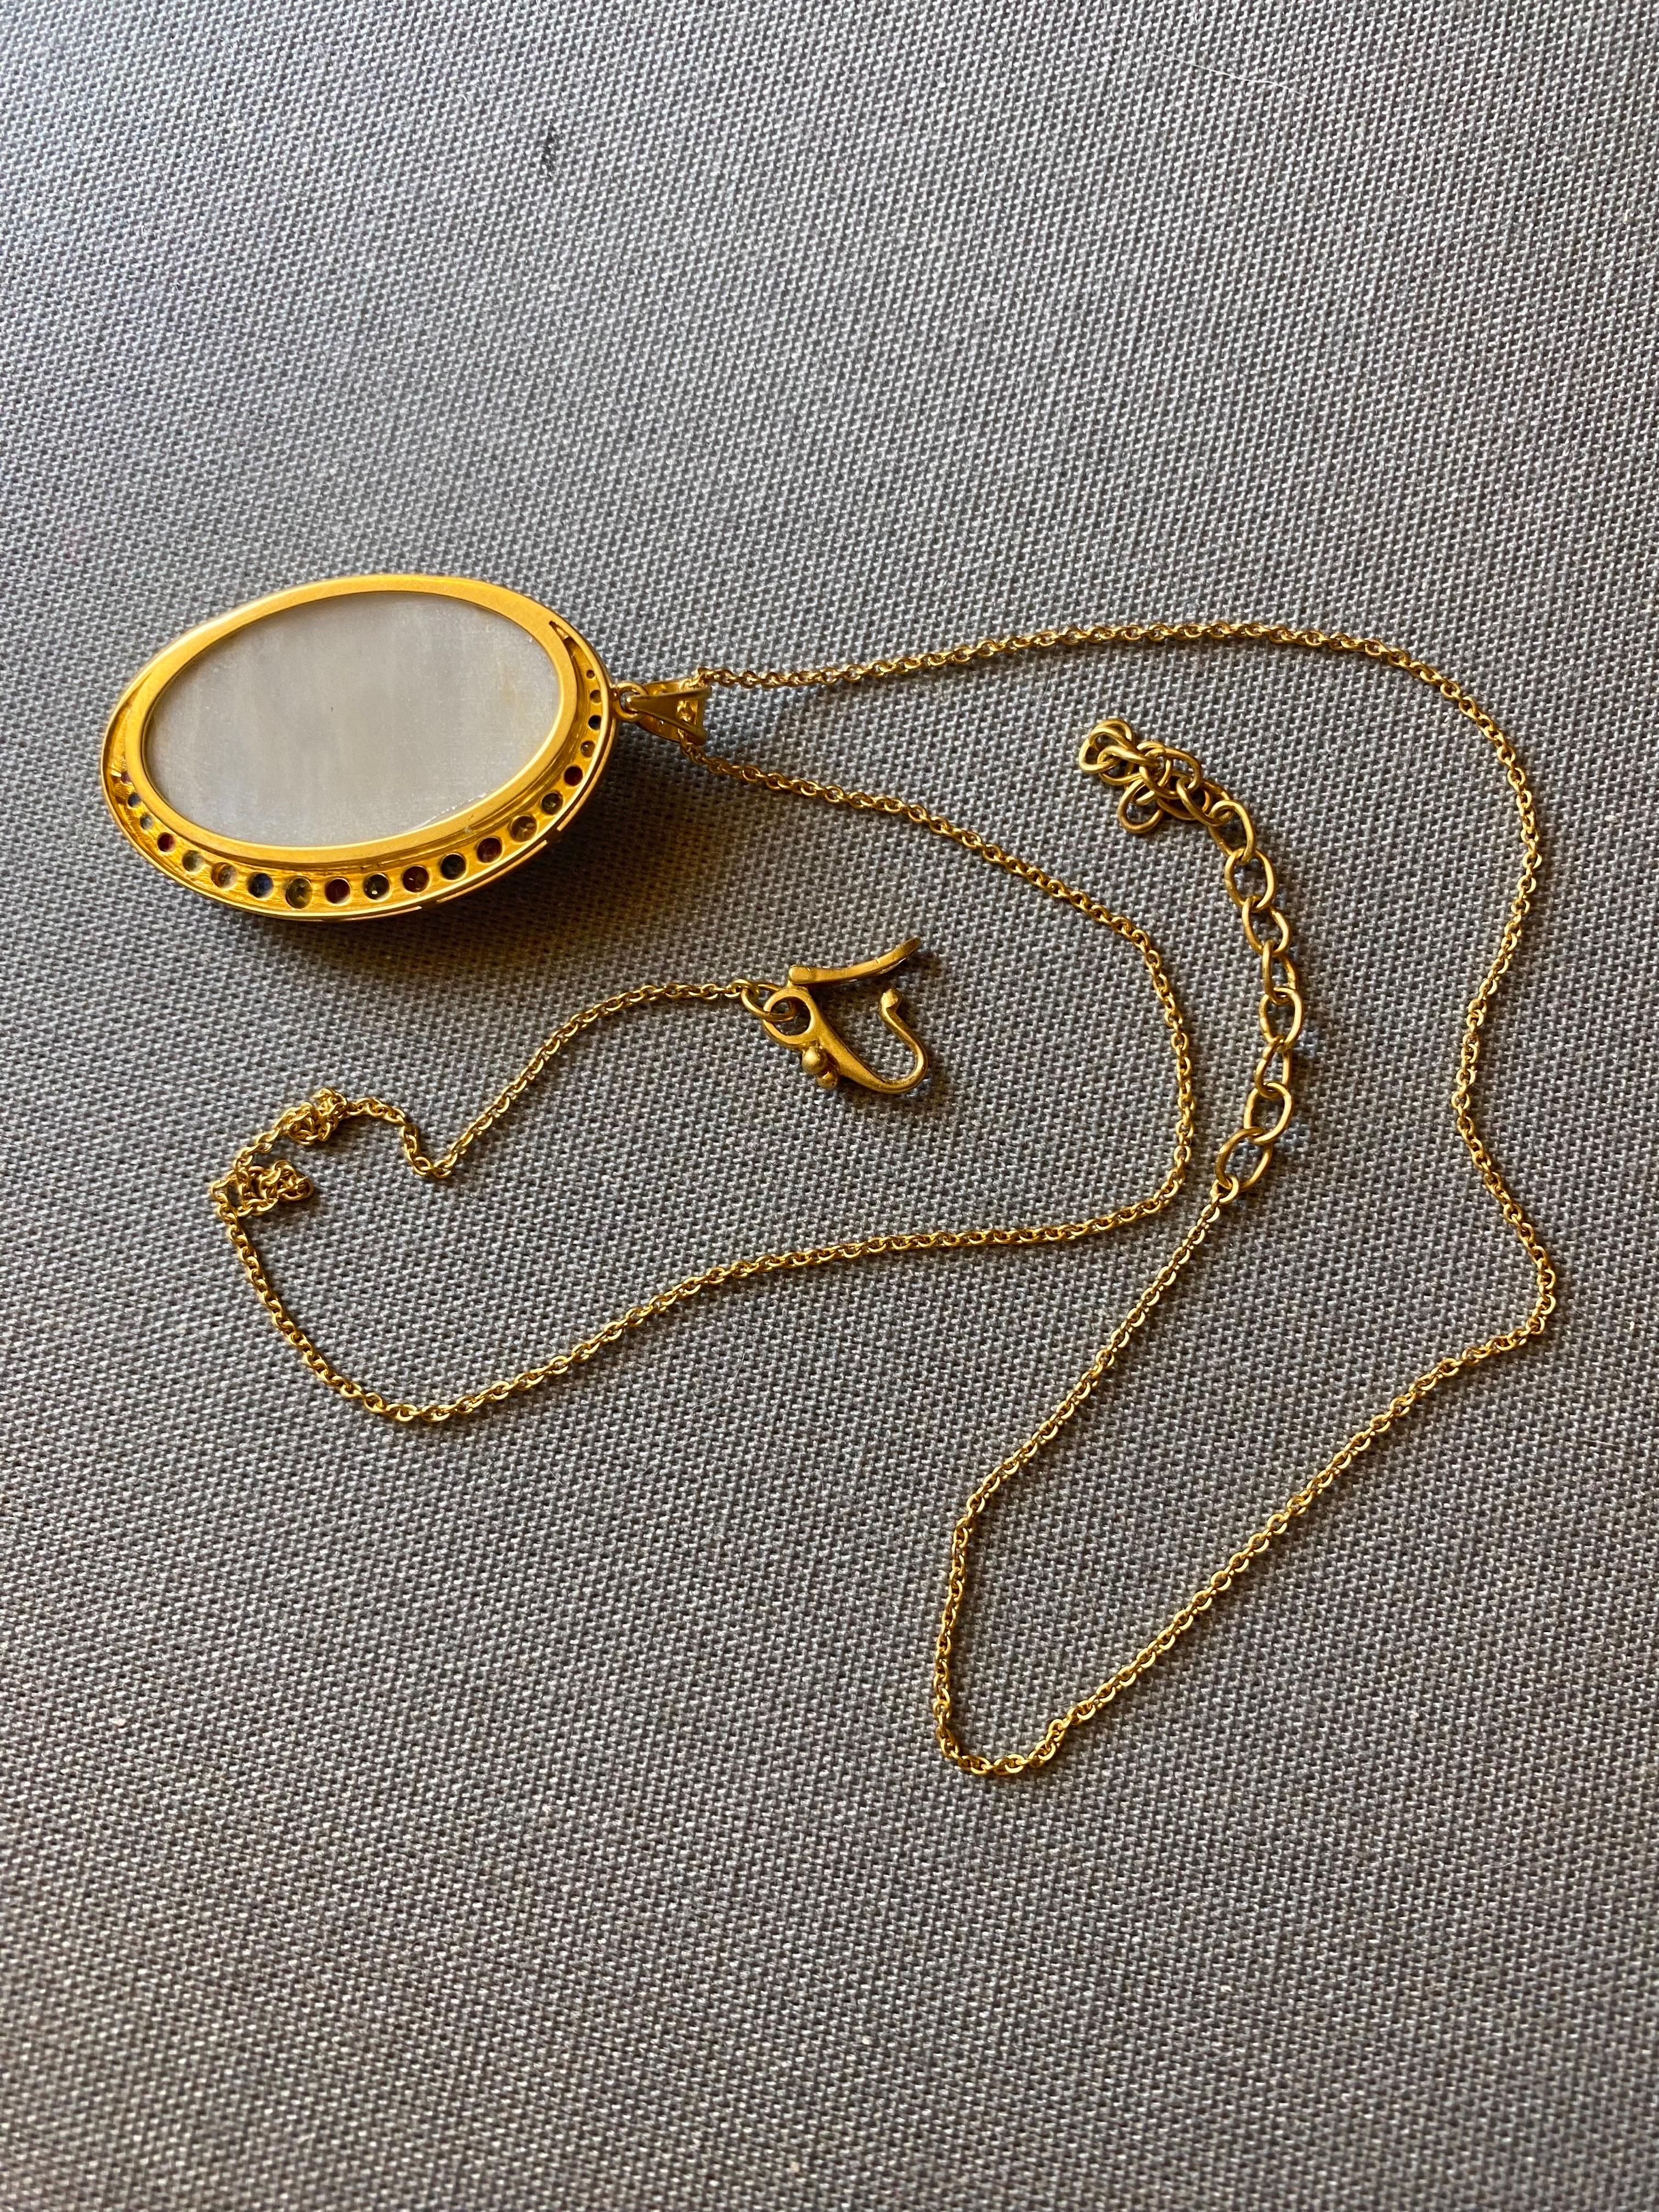 Multicolored Sapphires, Crystal Quartz, 18 karat Gold Oval Pendant Necklace For Sale 4